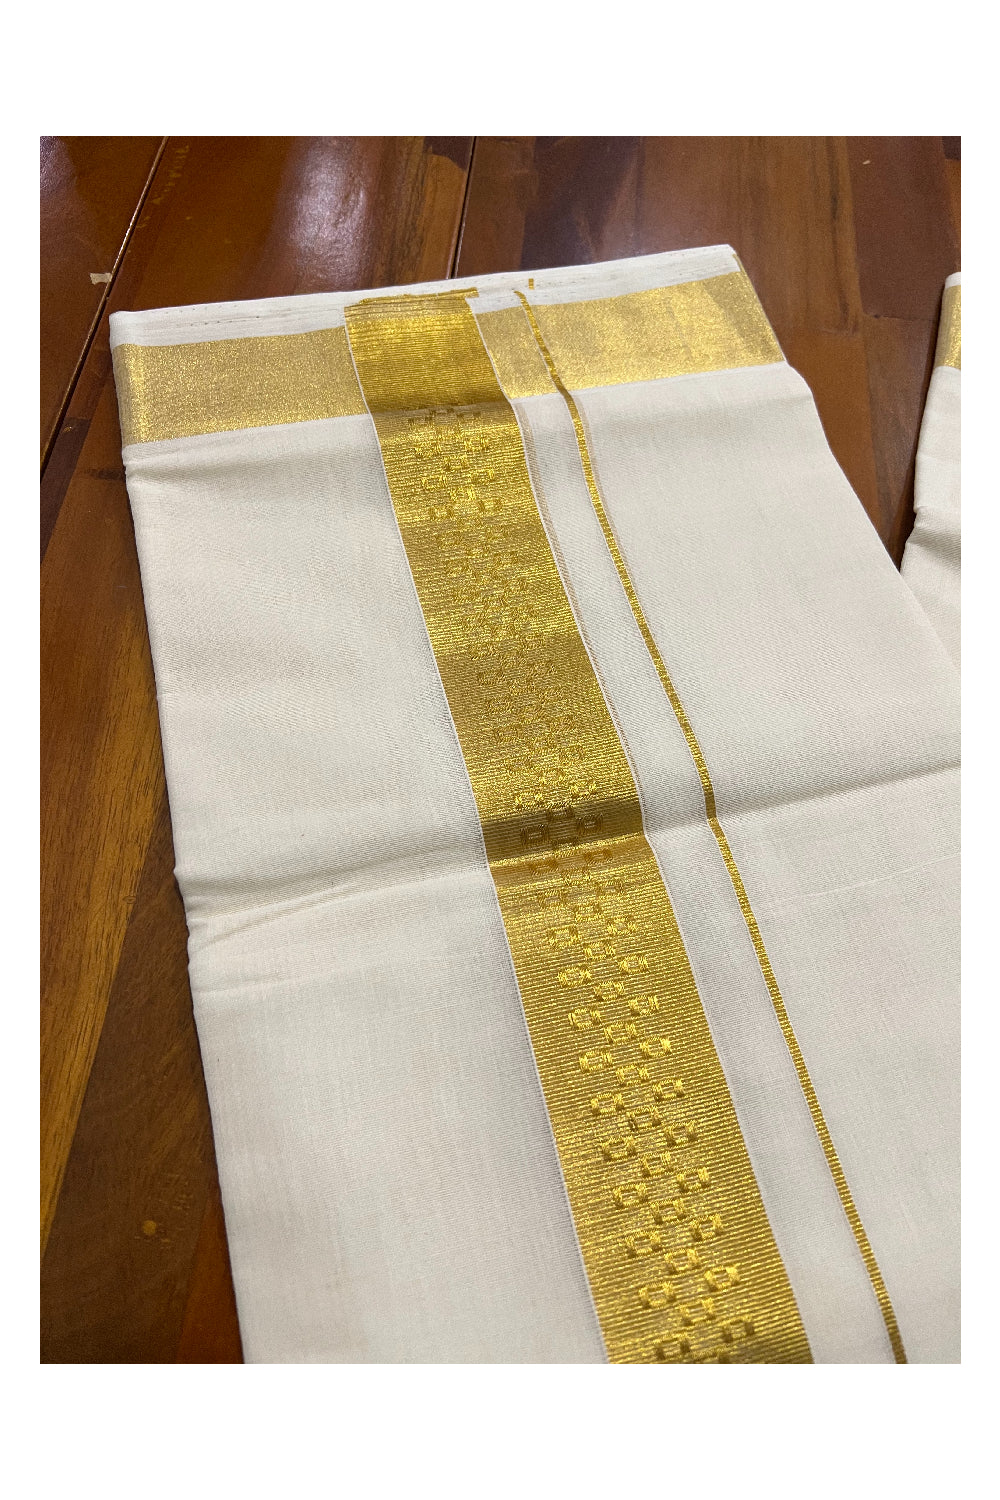 Southloom Balaramapuram Handloom Pure Cotton Wedding Mundu with Kasavu Woven Design Border (South Indian Dhoti)